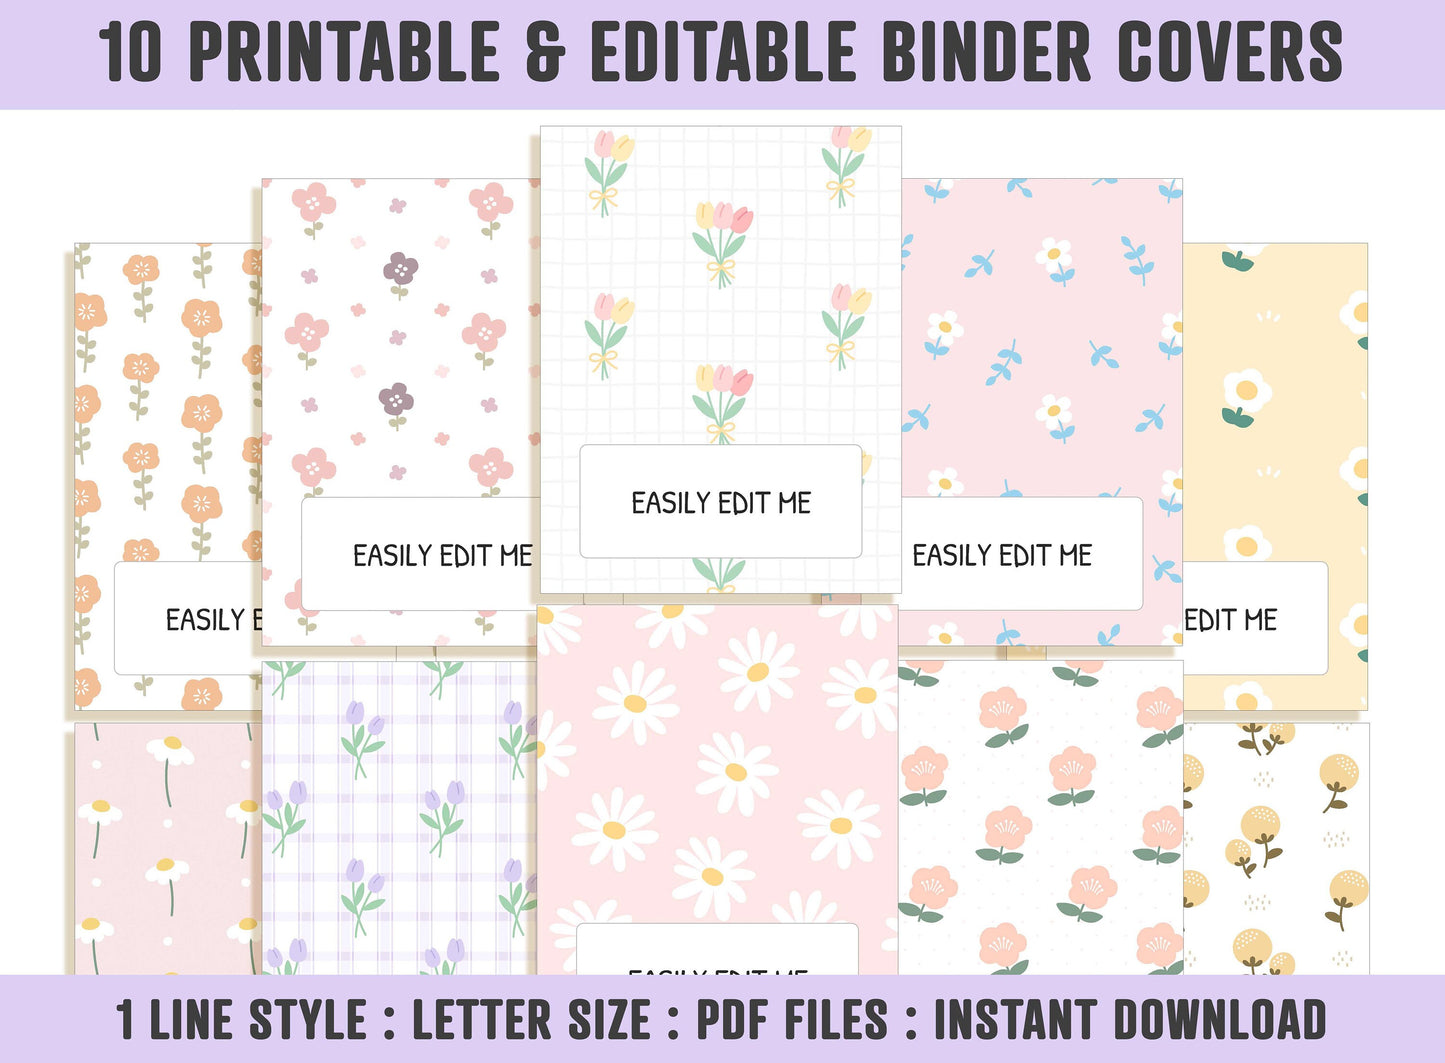 Flower Binder Cover, 10 Covers+Spines, Binder Cover Printable, Editable, Teacher/School Binder Cover, Planner Cover, Binder Inserts, Floral